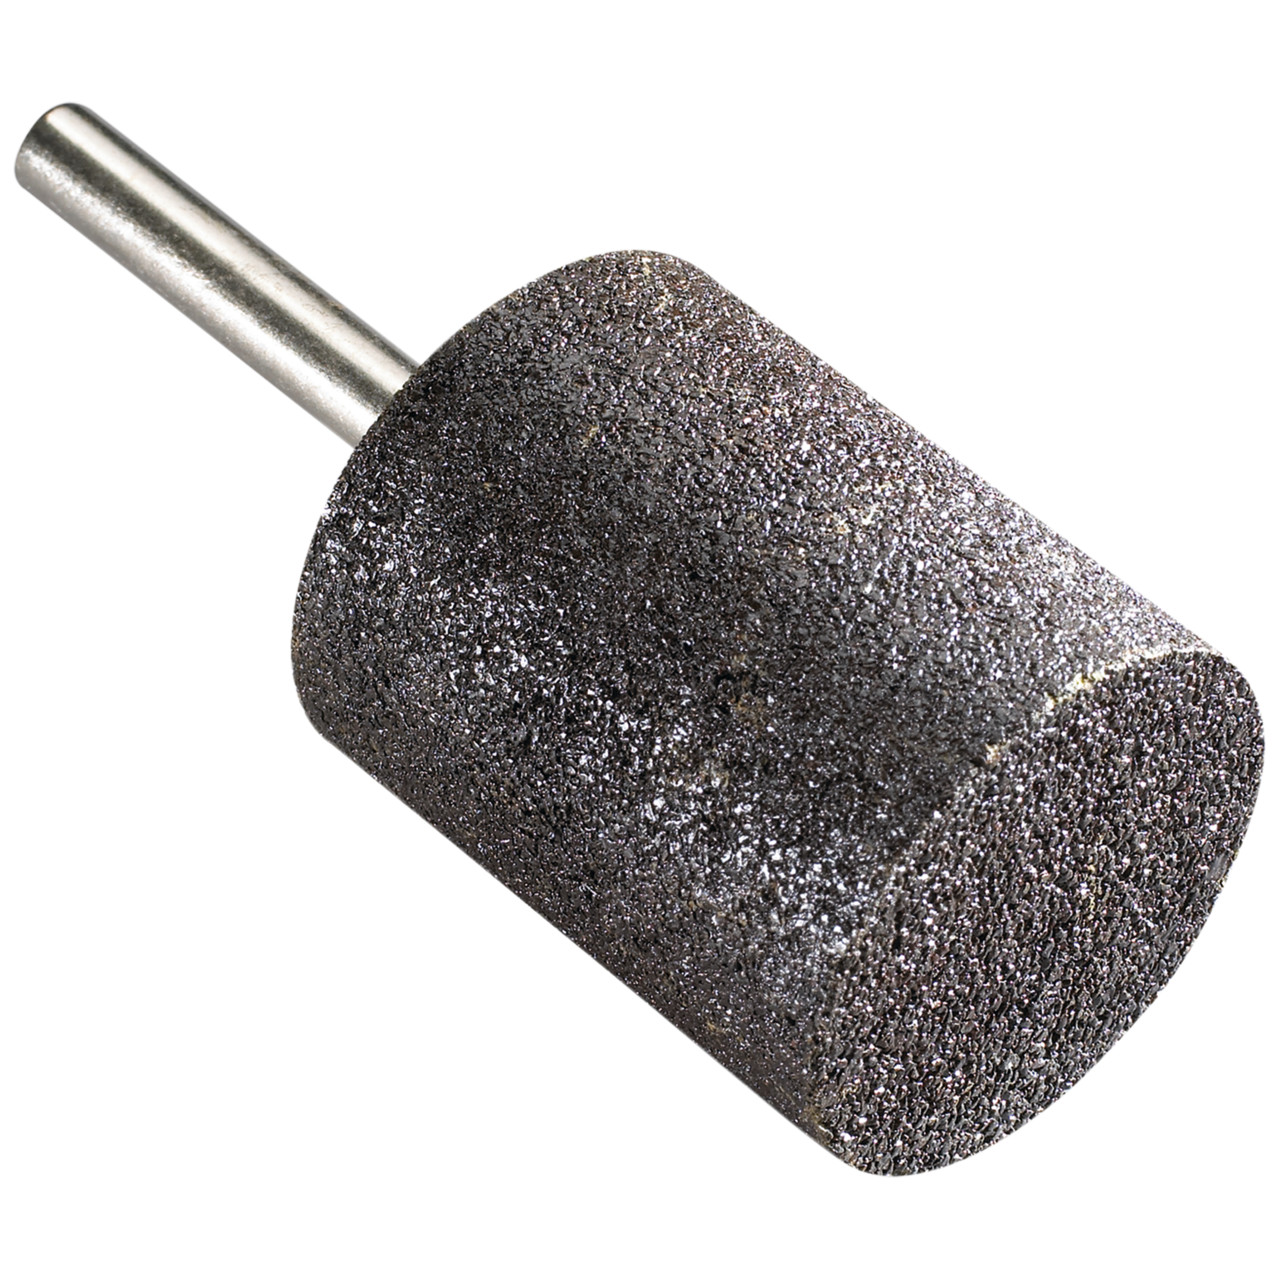 Tyrolit Punti montati in resina DxT-SxL 16x25-6x40 Per ghisa, forma: 52W - cilindro (punto montato), Art. 21137